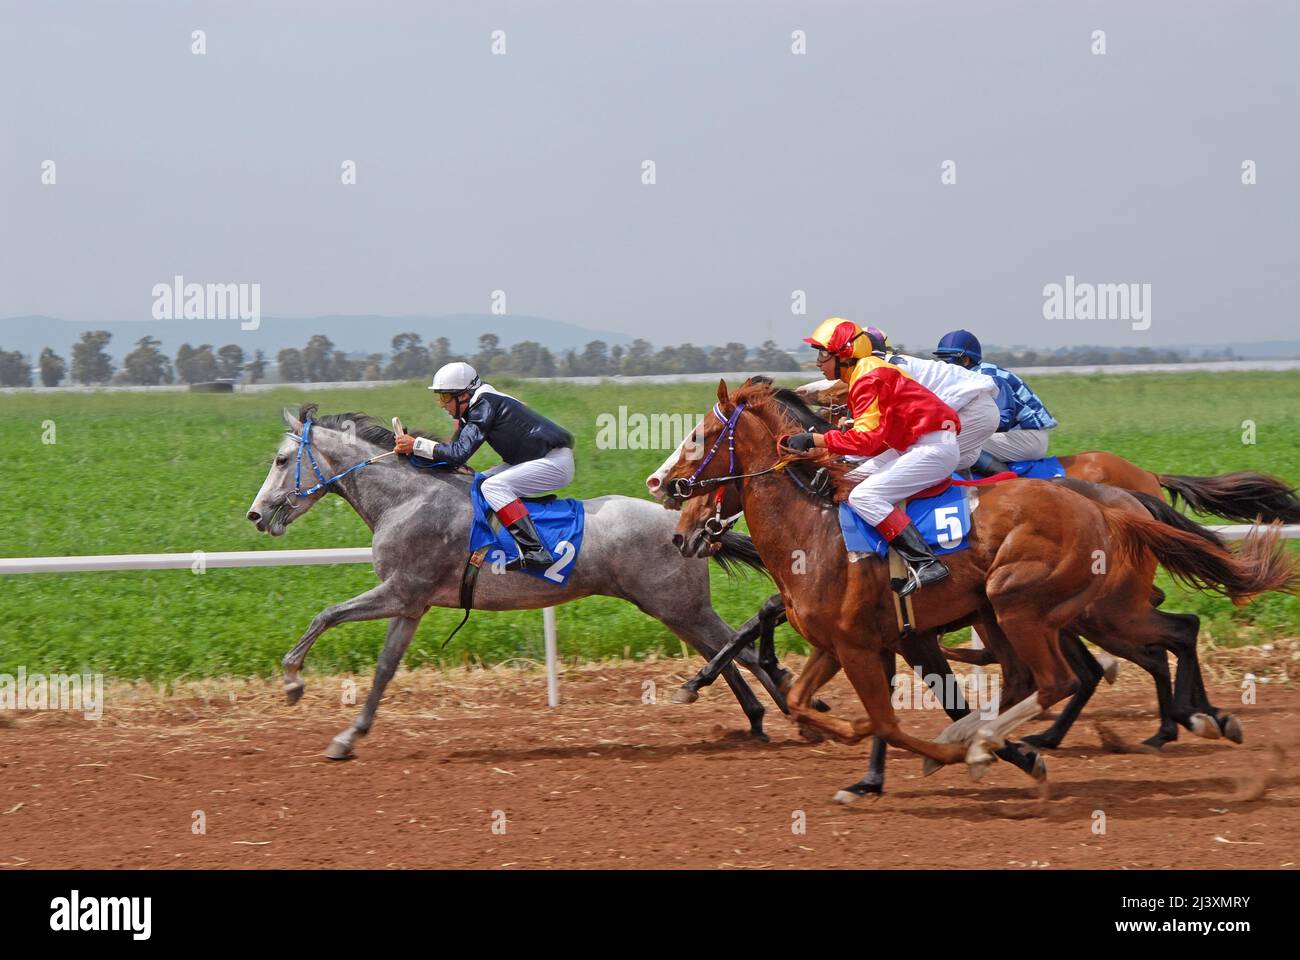 Horse race Stock Photo